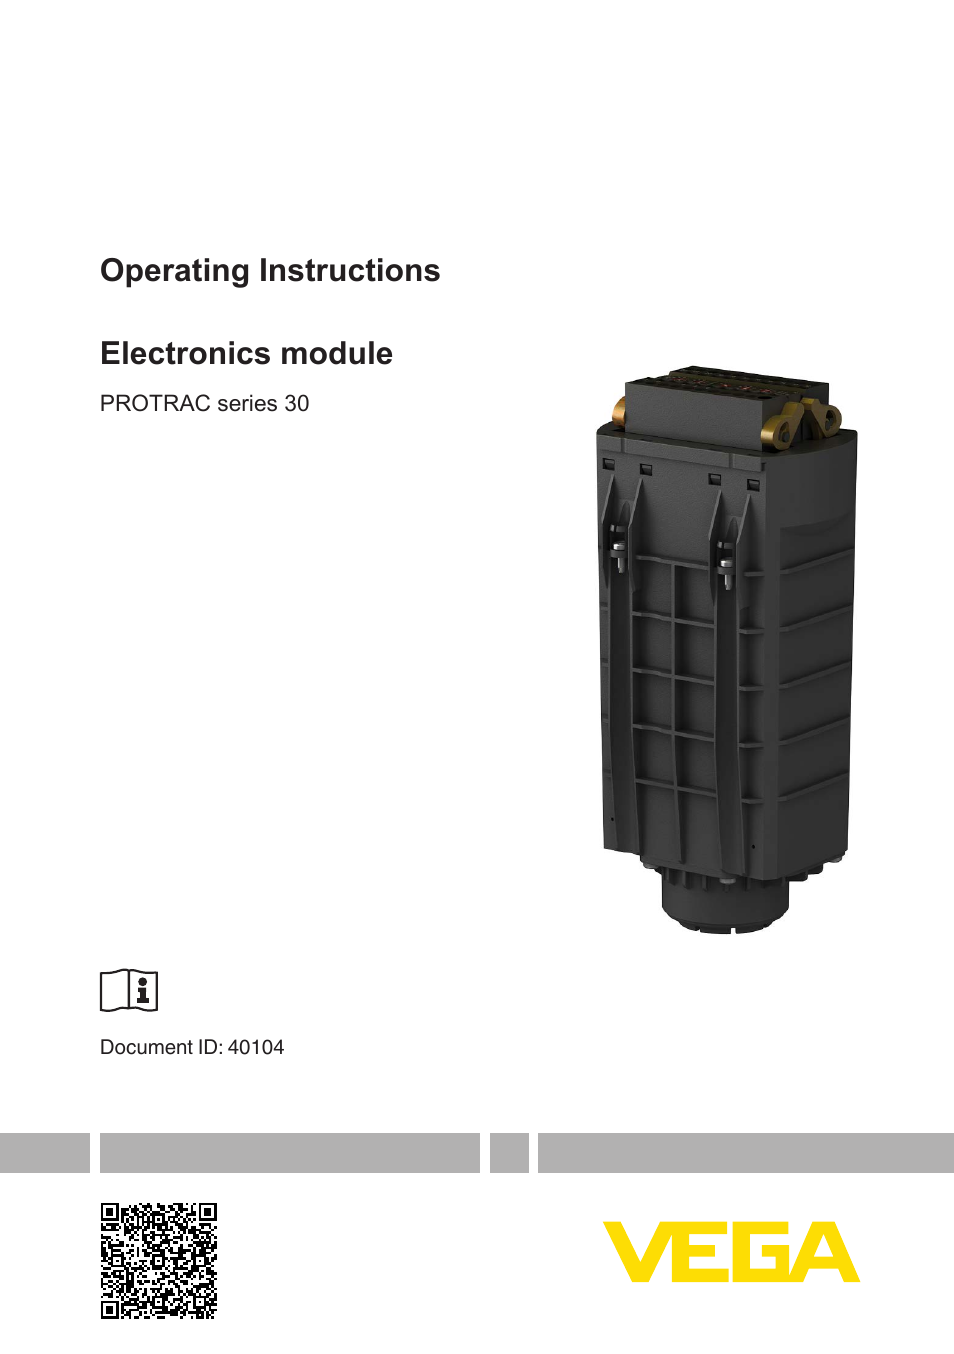 PROTRAC series 30 Electronics module